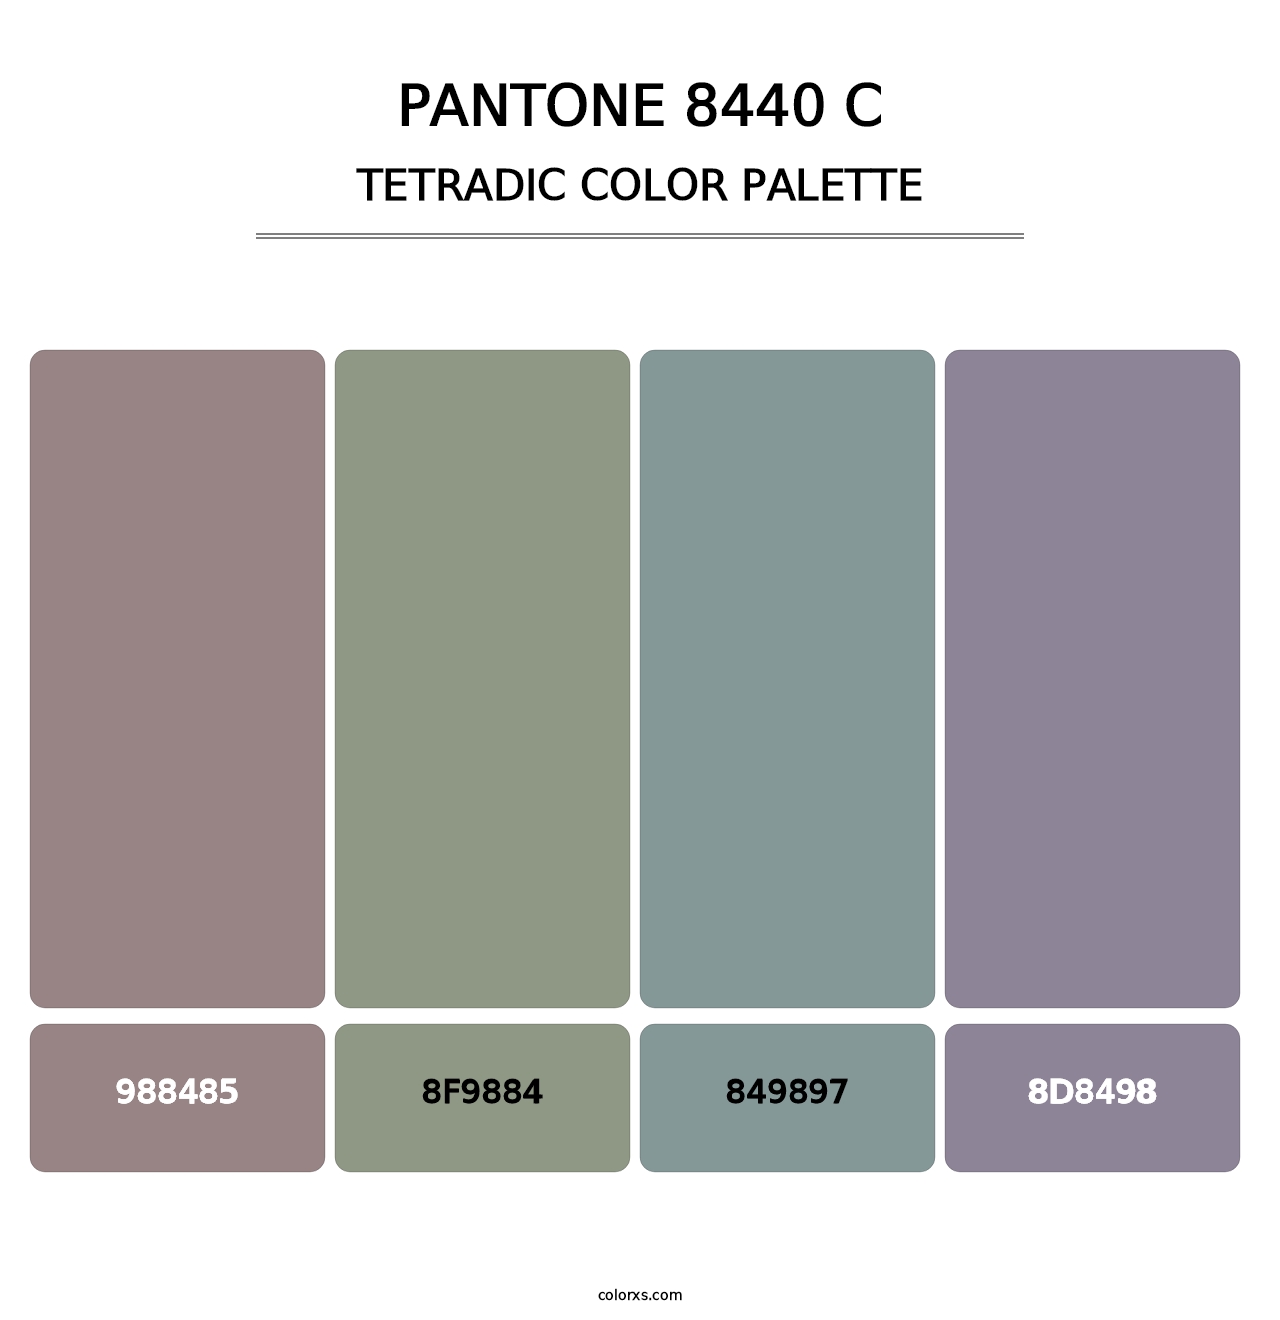 PANTONE 8440 C - Tetradic Color Palette